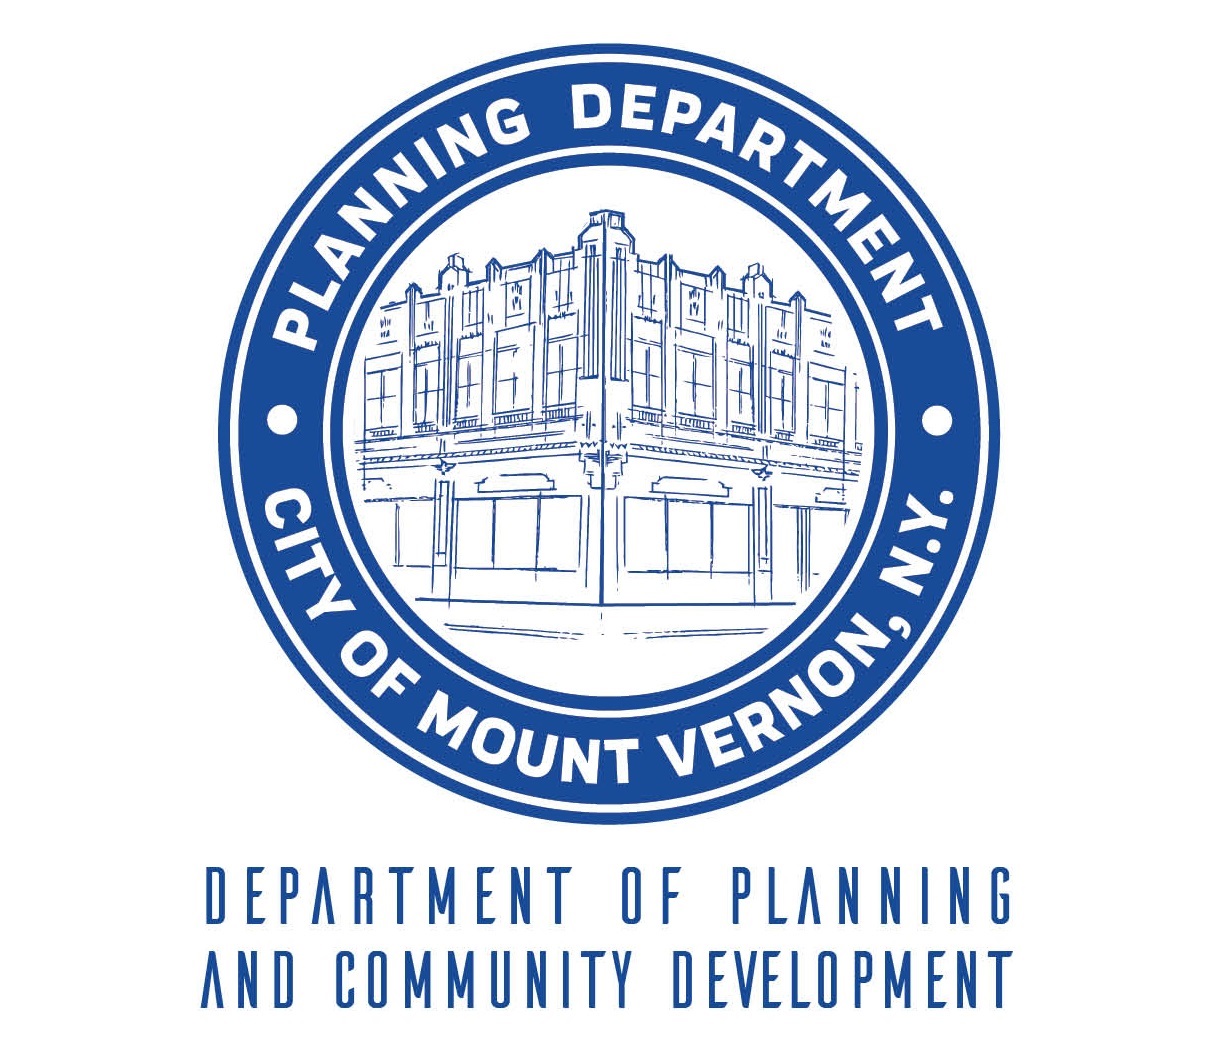 Organization logo of City of Mount Vernon - Department of Planning & Community Development